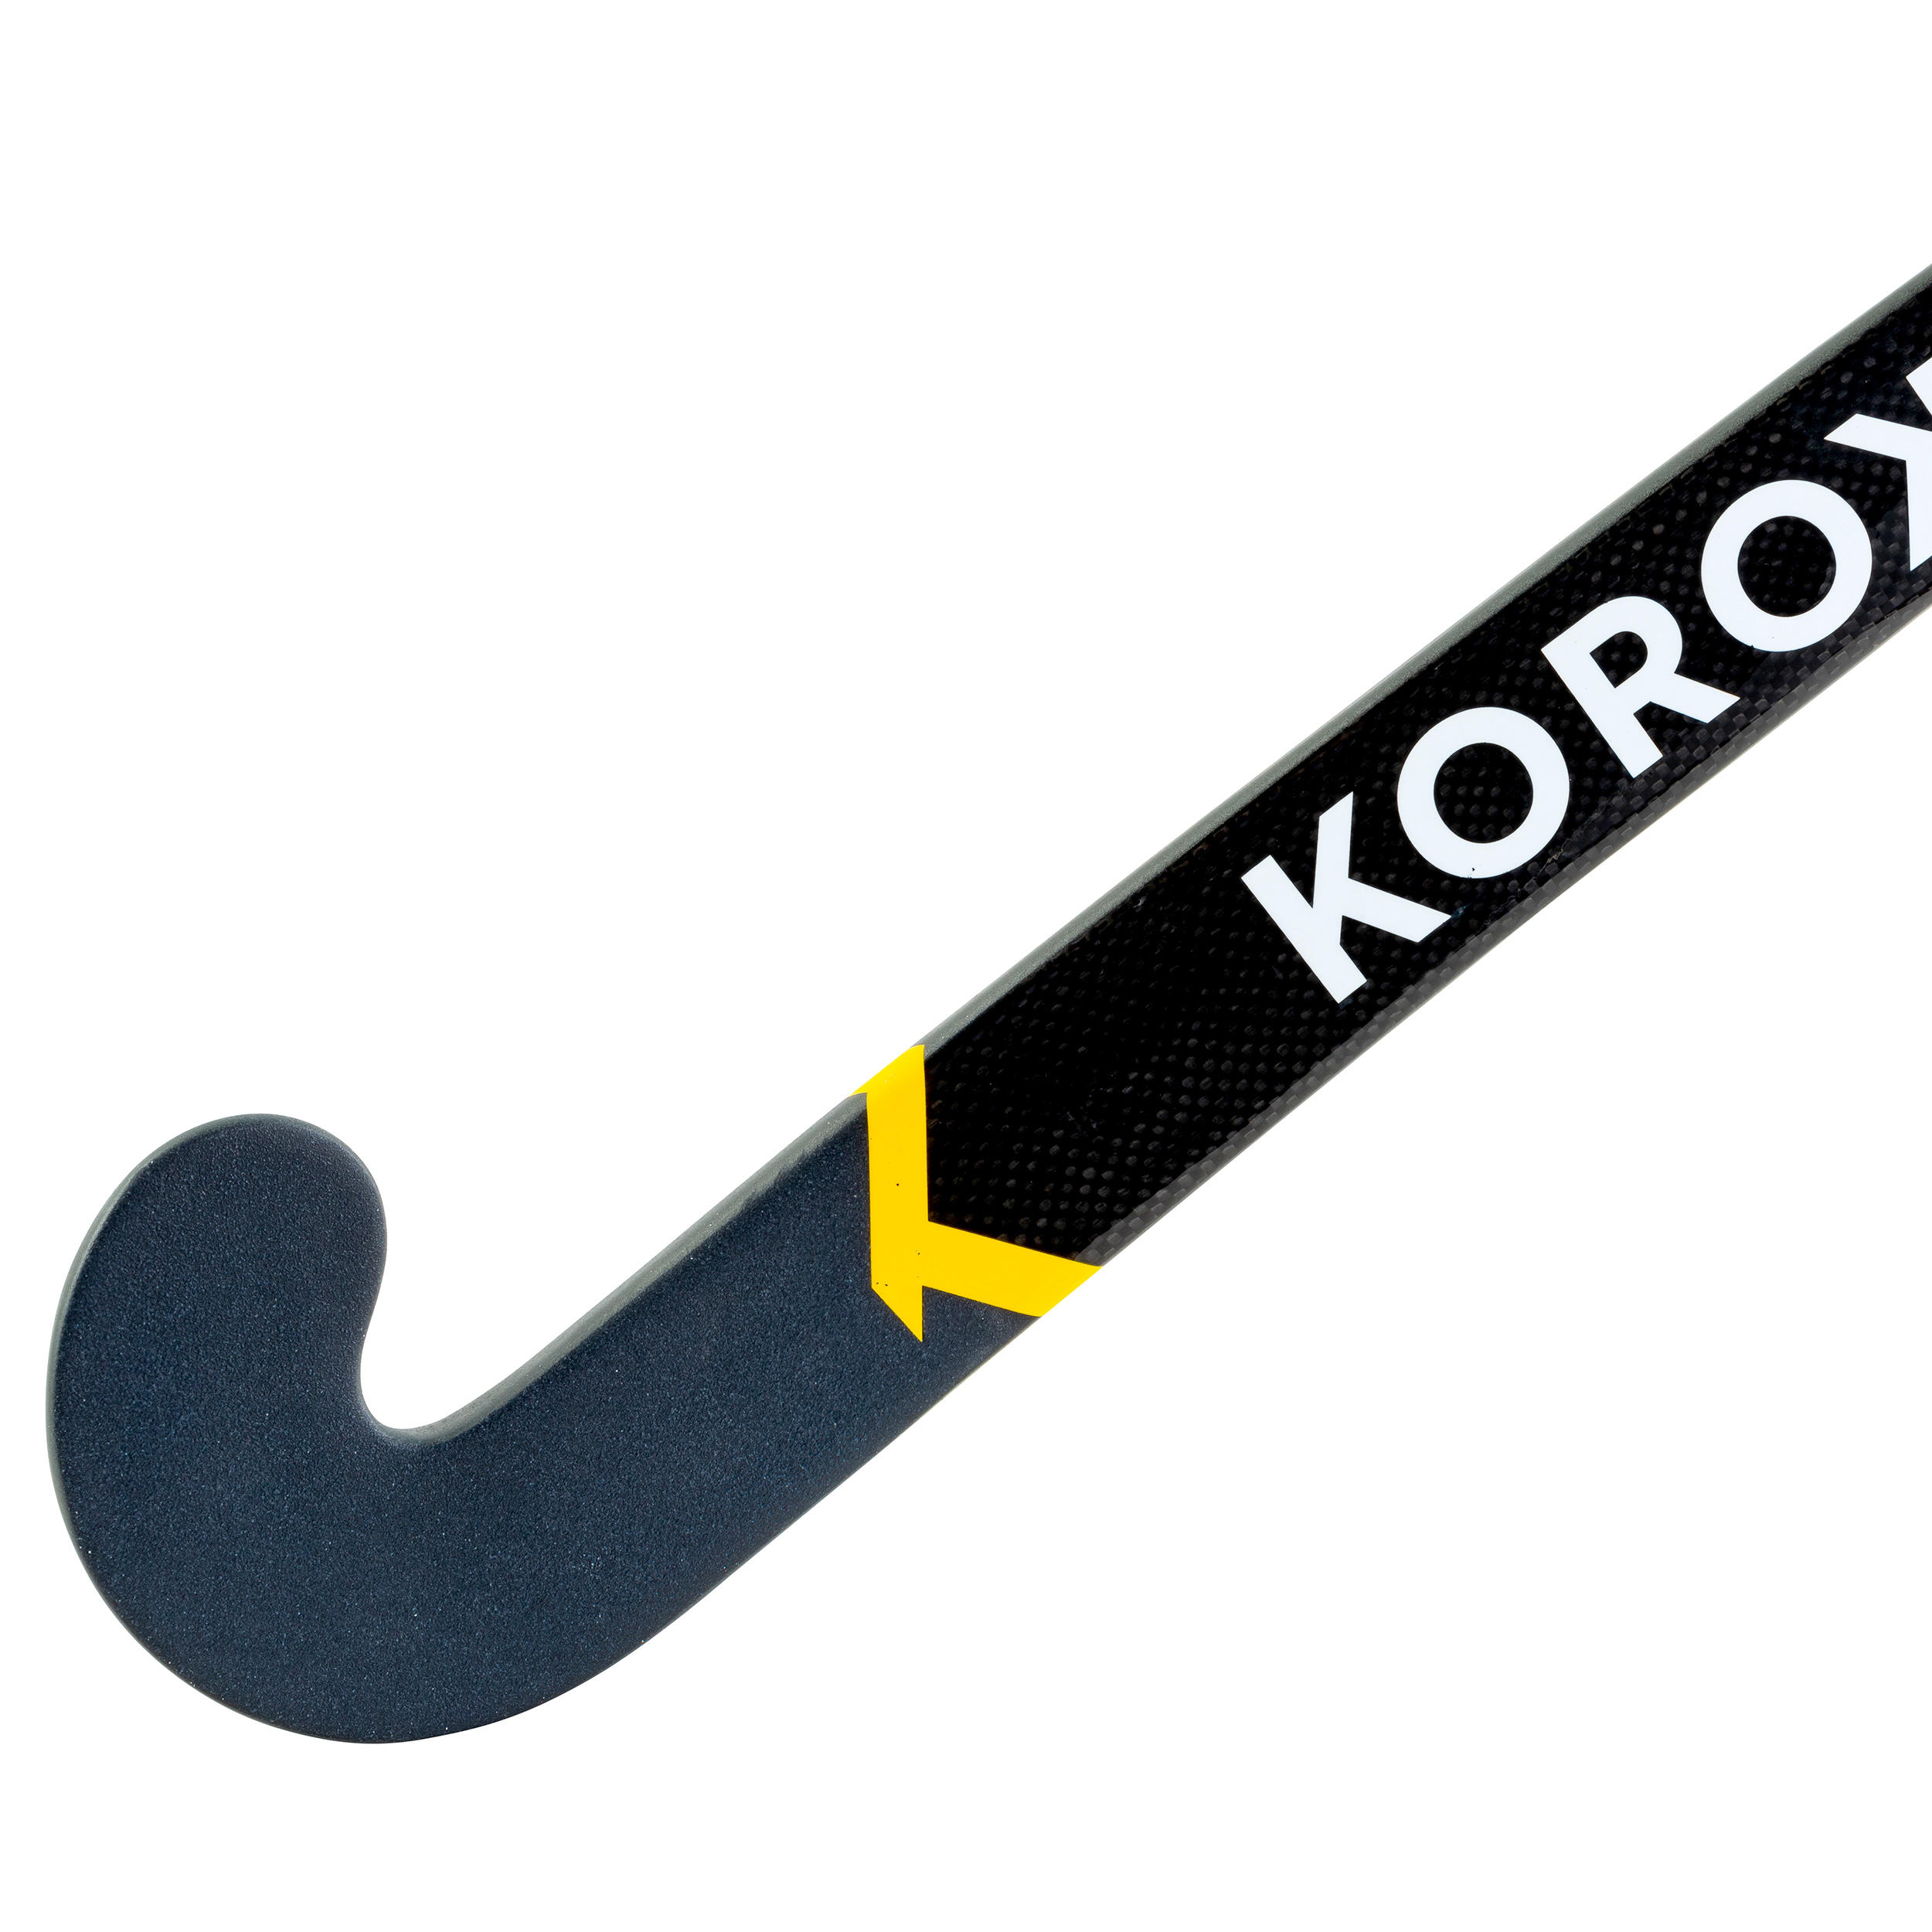 Adult Intermediate 30% Carbon Low Bow Field Hockey Stick FH530 - Grey/Yellow 3/12